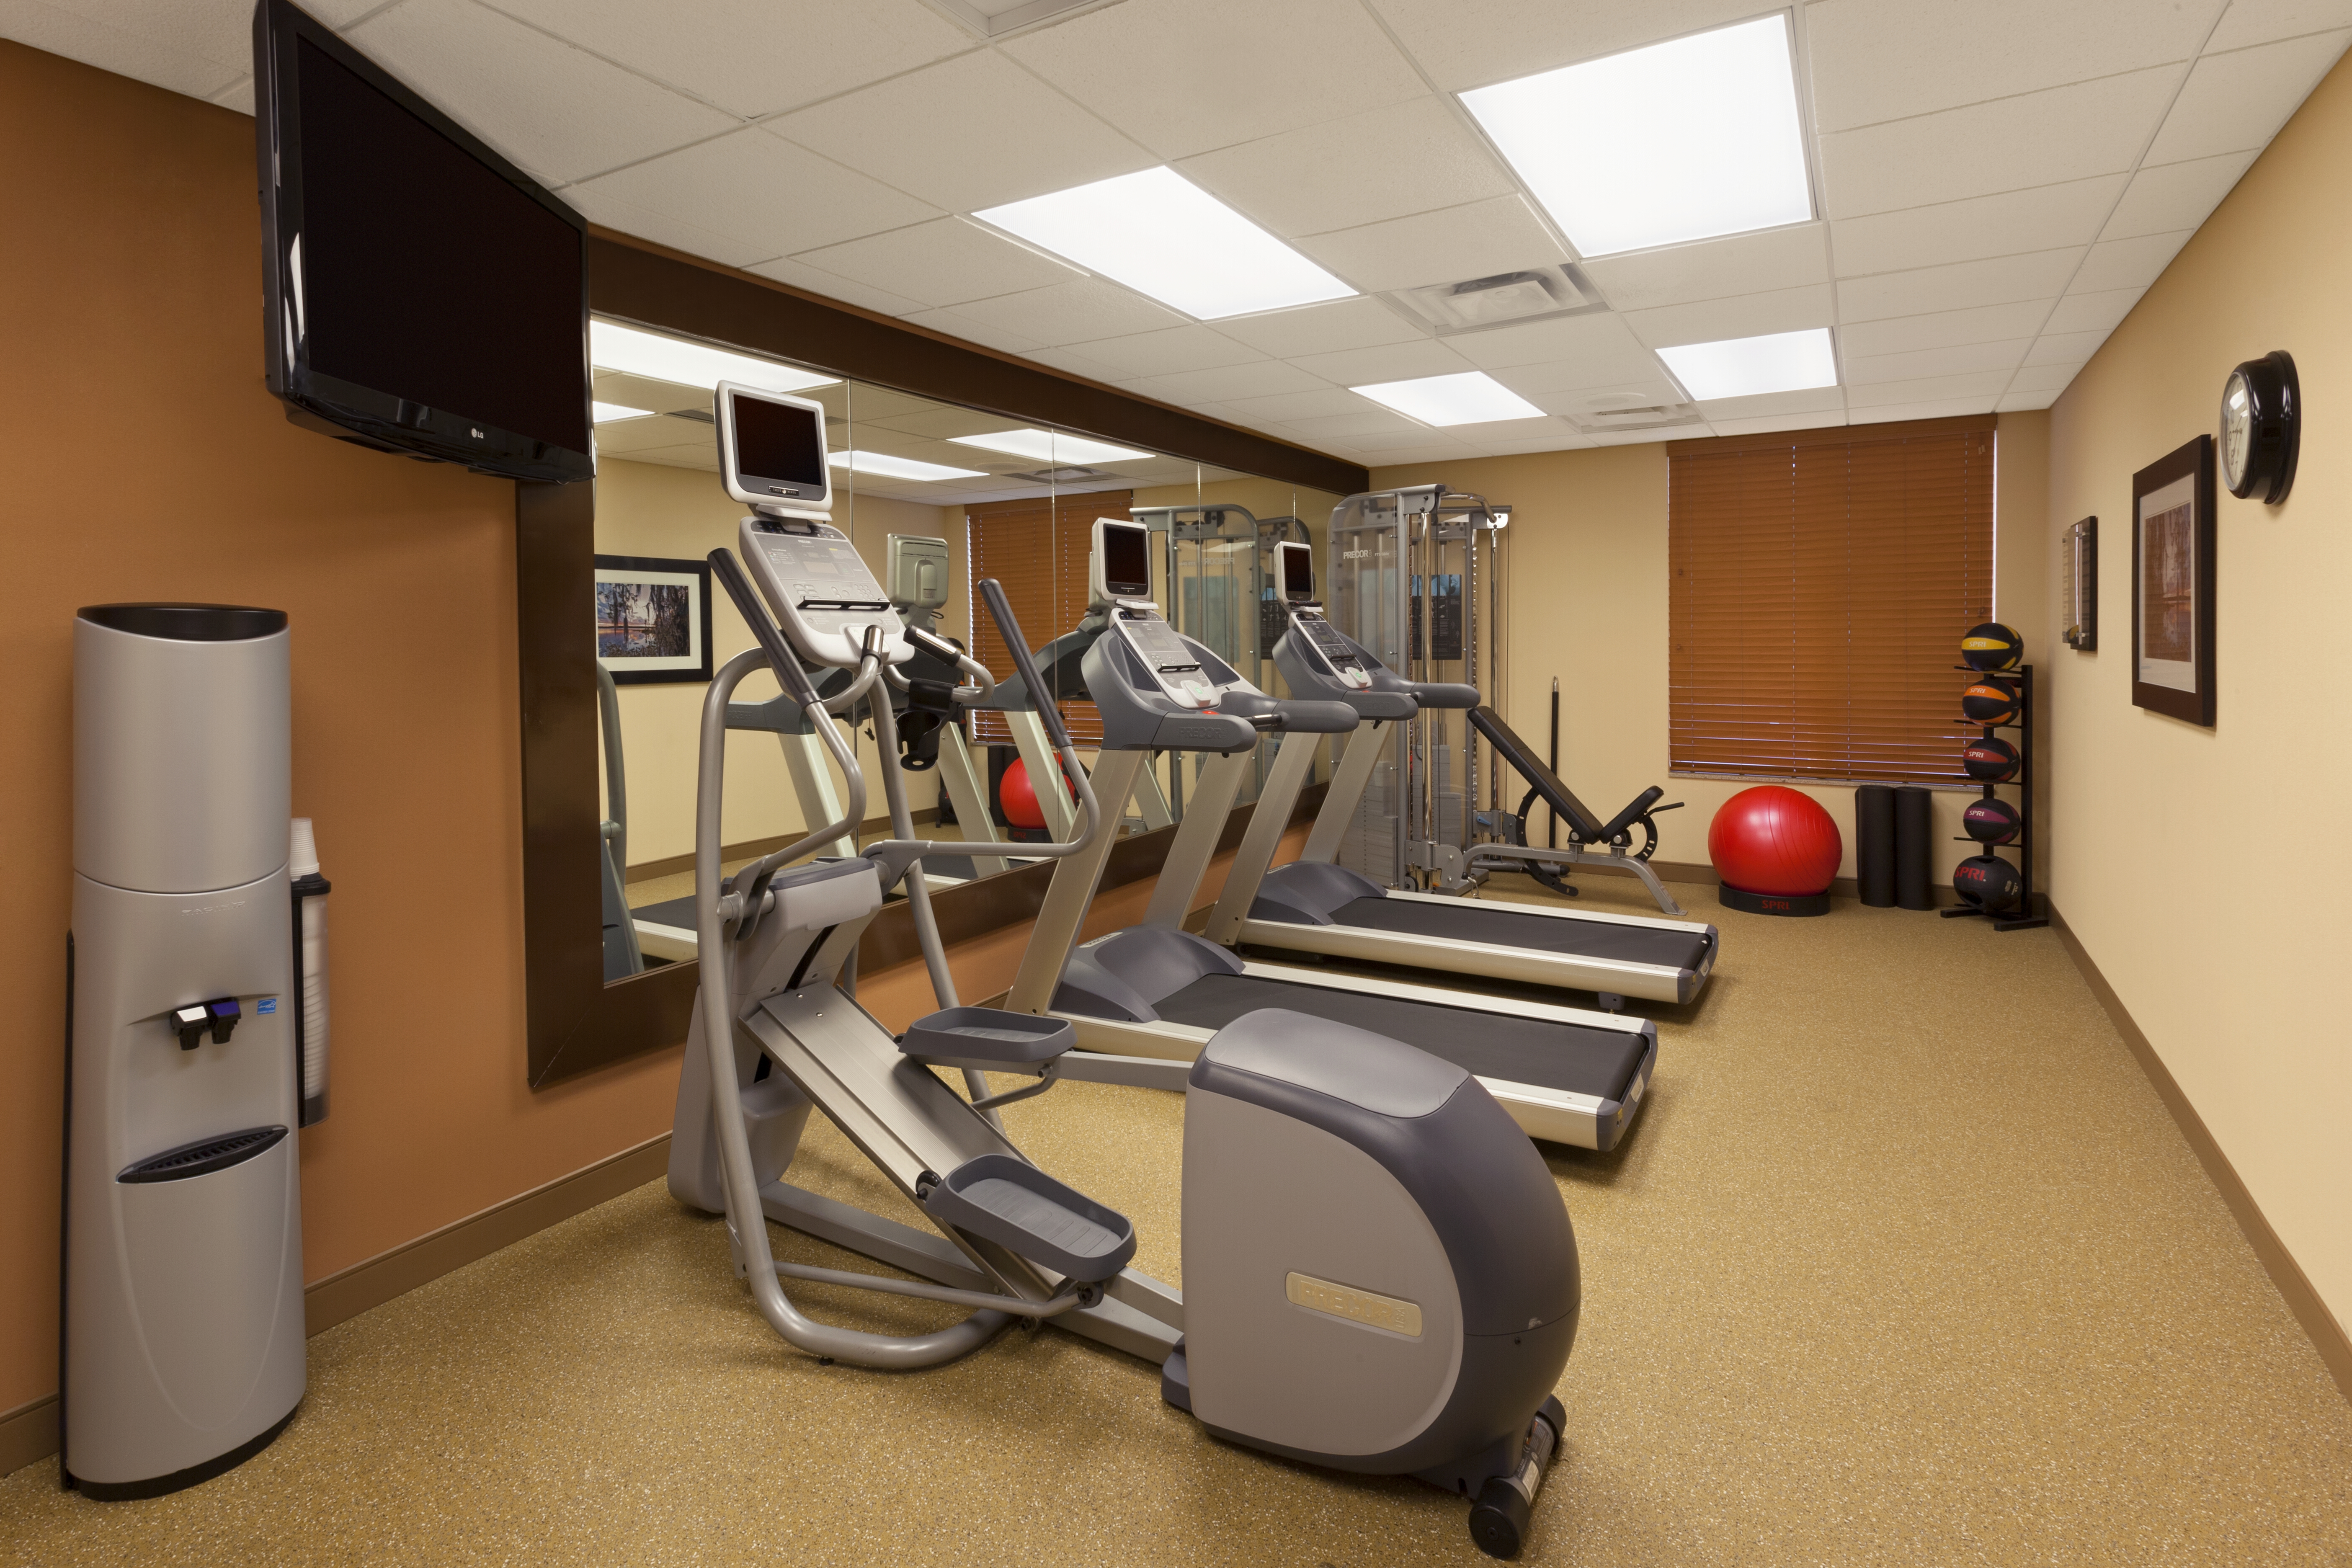 Fitness center equipment treadmills and elliptical